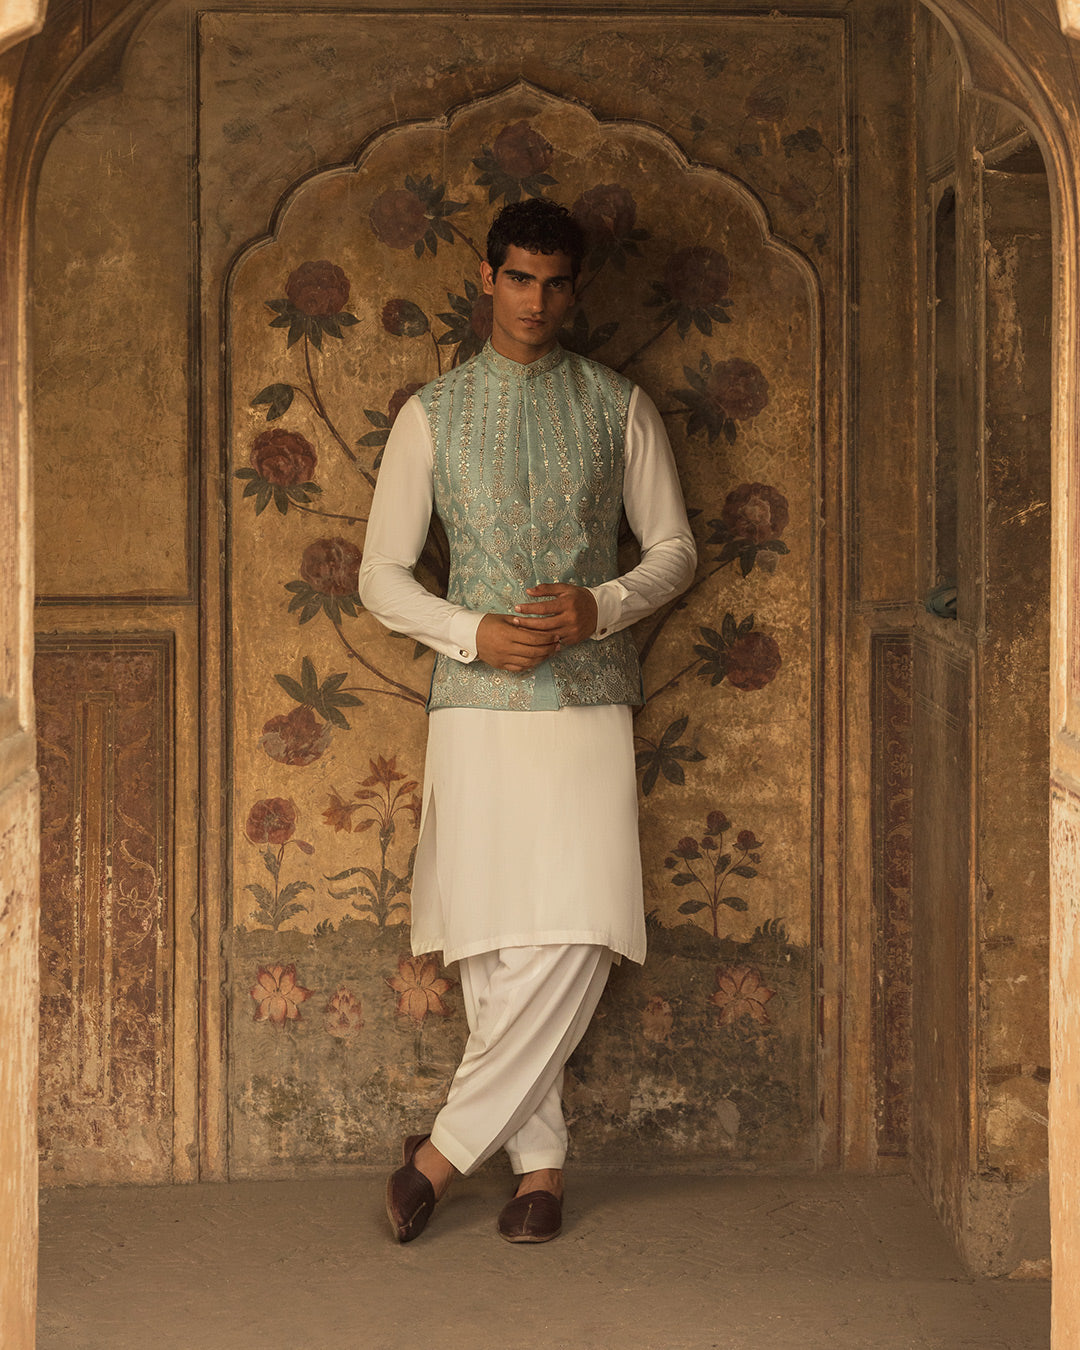 Pakistani Menswear | Afshar - Khanumjan  Pakistani Clothes and Designer Dresses in UK, USA 